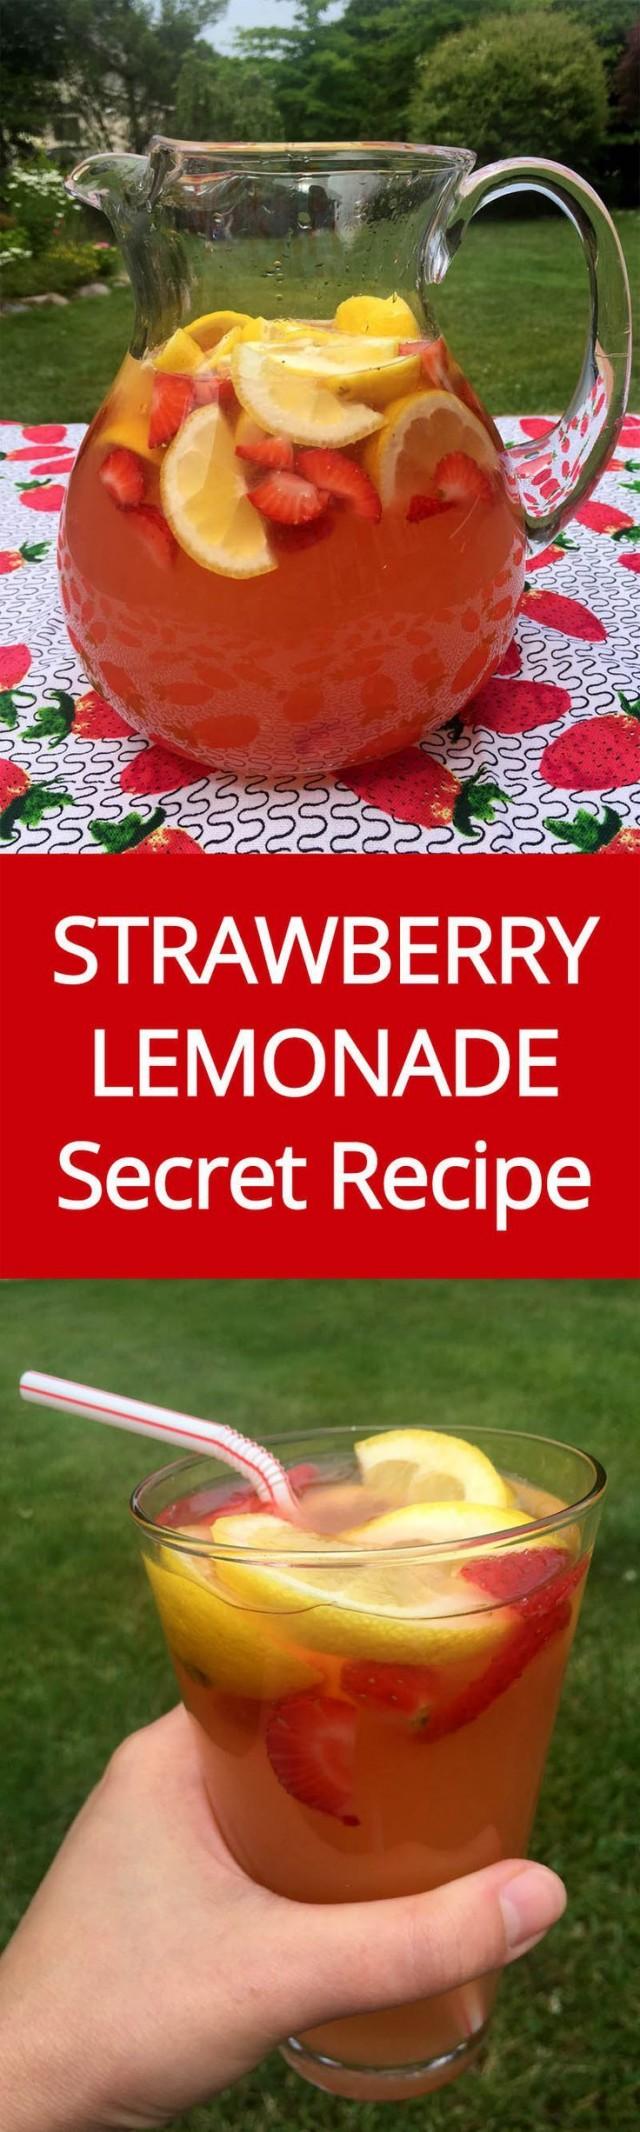 Homemade Strawberry Lemonade Recipe With Freshly Squeezed Lemons & Strawberry Slices